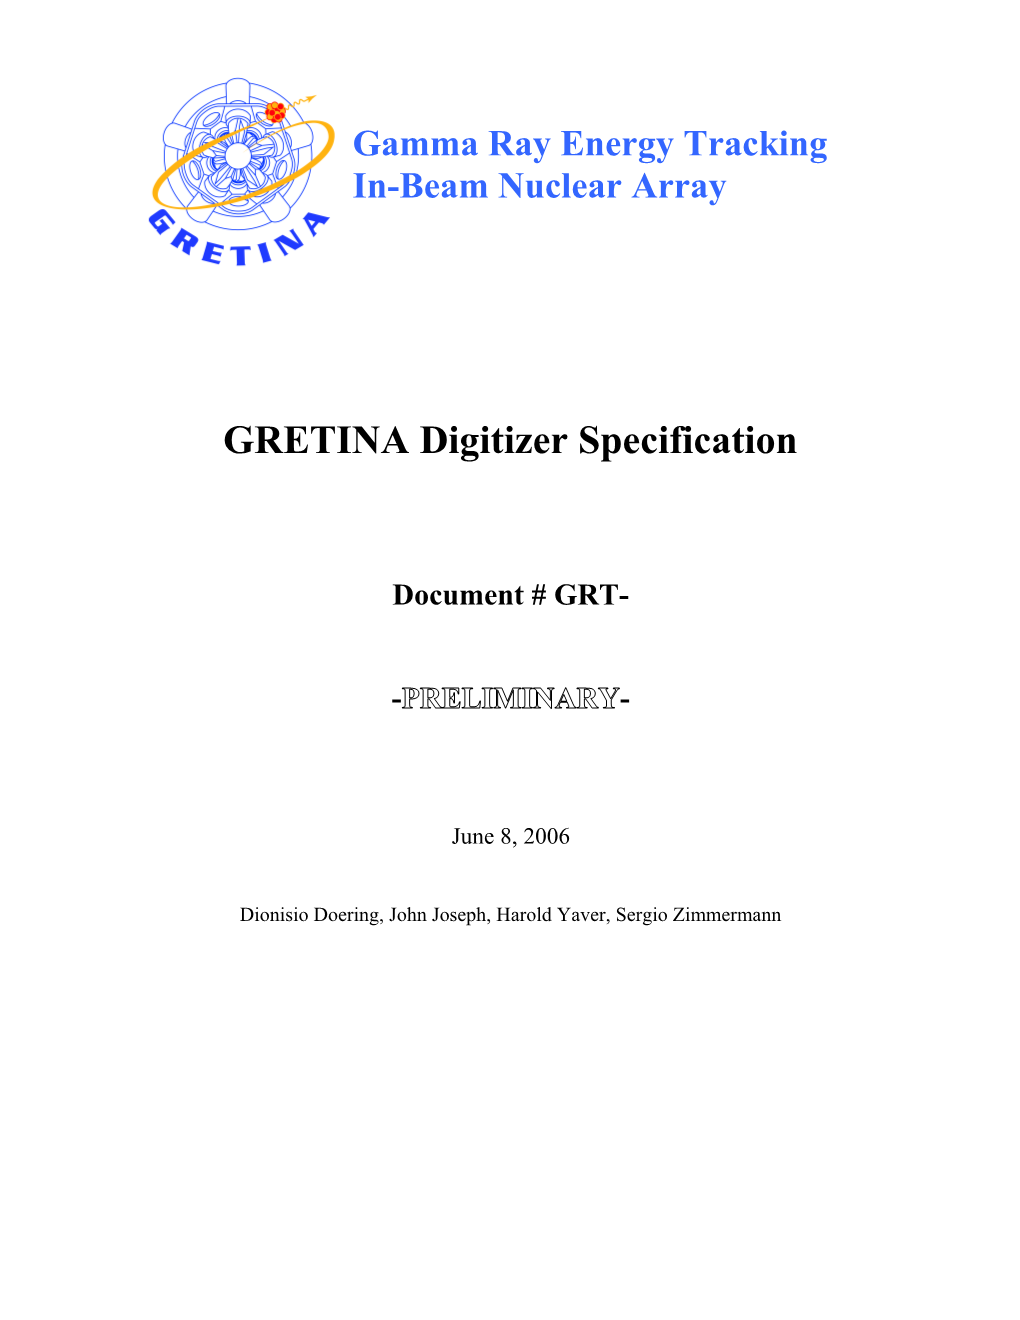 GRETINA Electronics Requirement Document